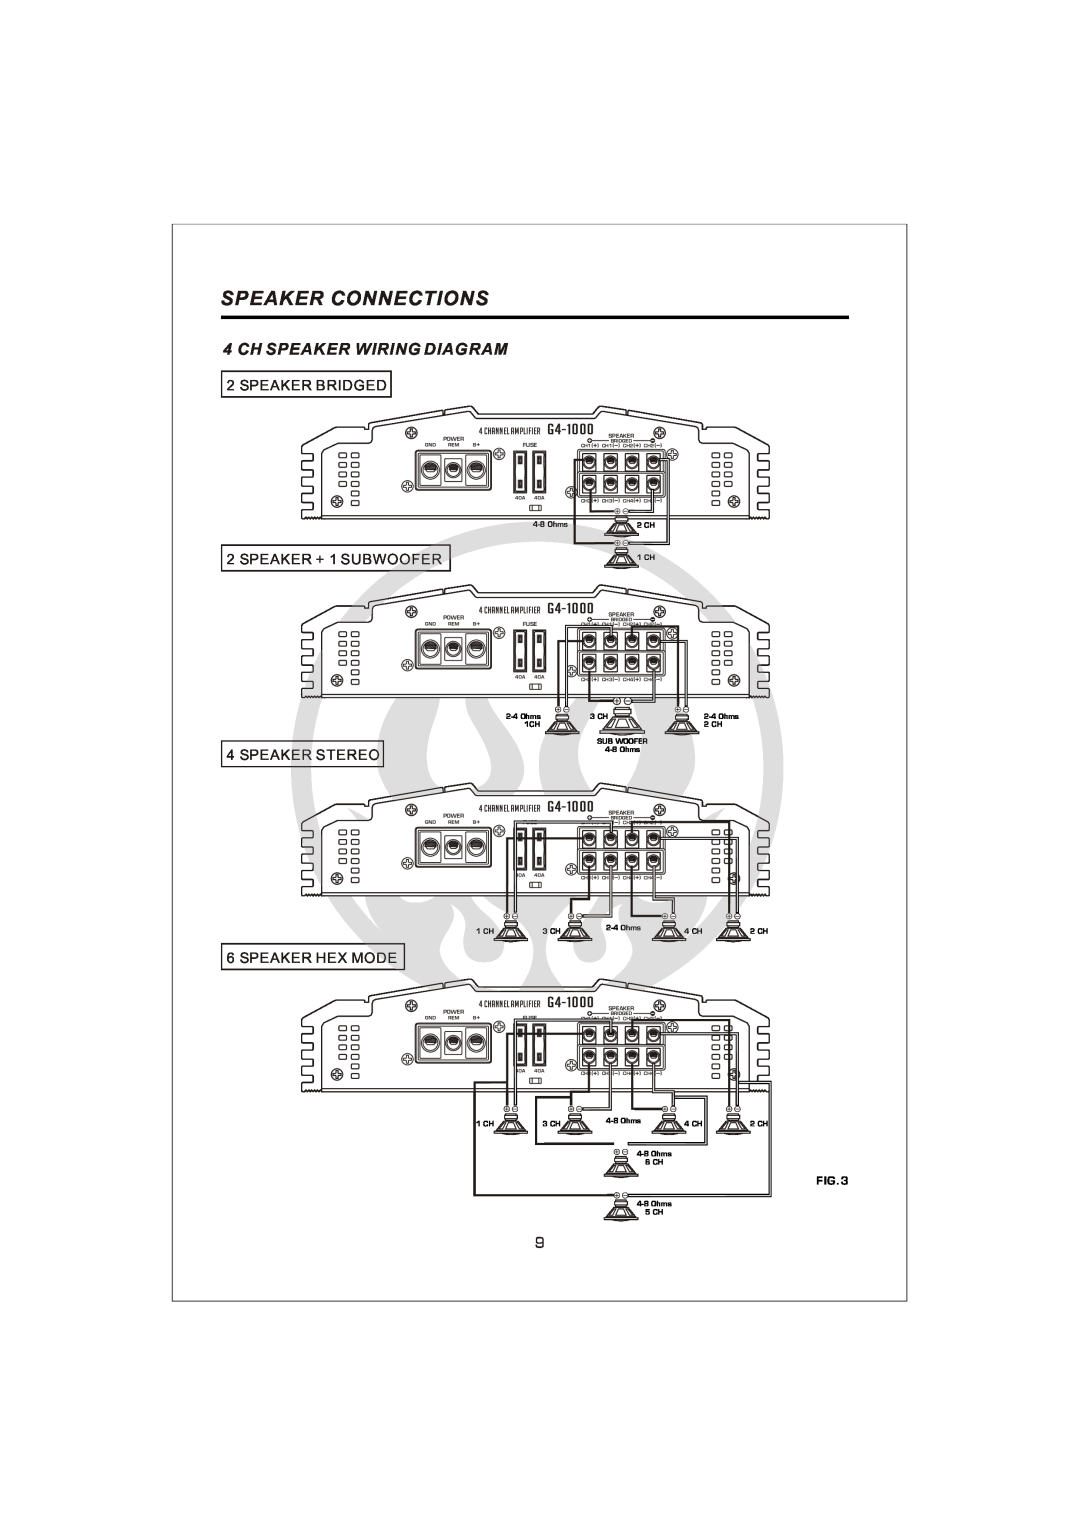 Interfire Audio G4-600, G4-1000 Ch Speaker Wiring Diagram, Speaker Connections, Speaker Bridged, SPEAKER + 1 SUBWOOFER 